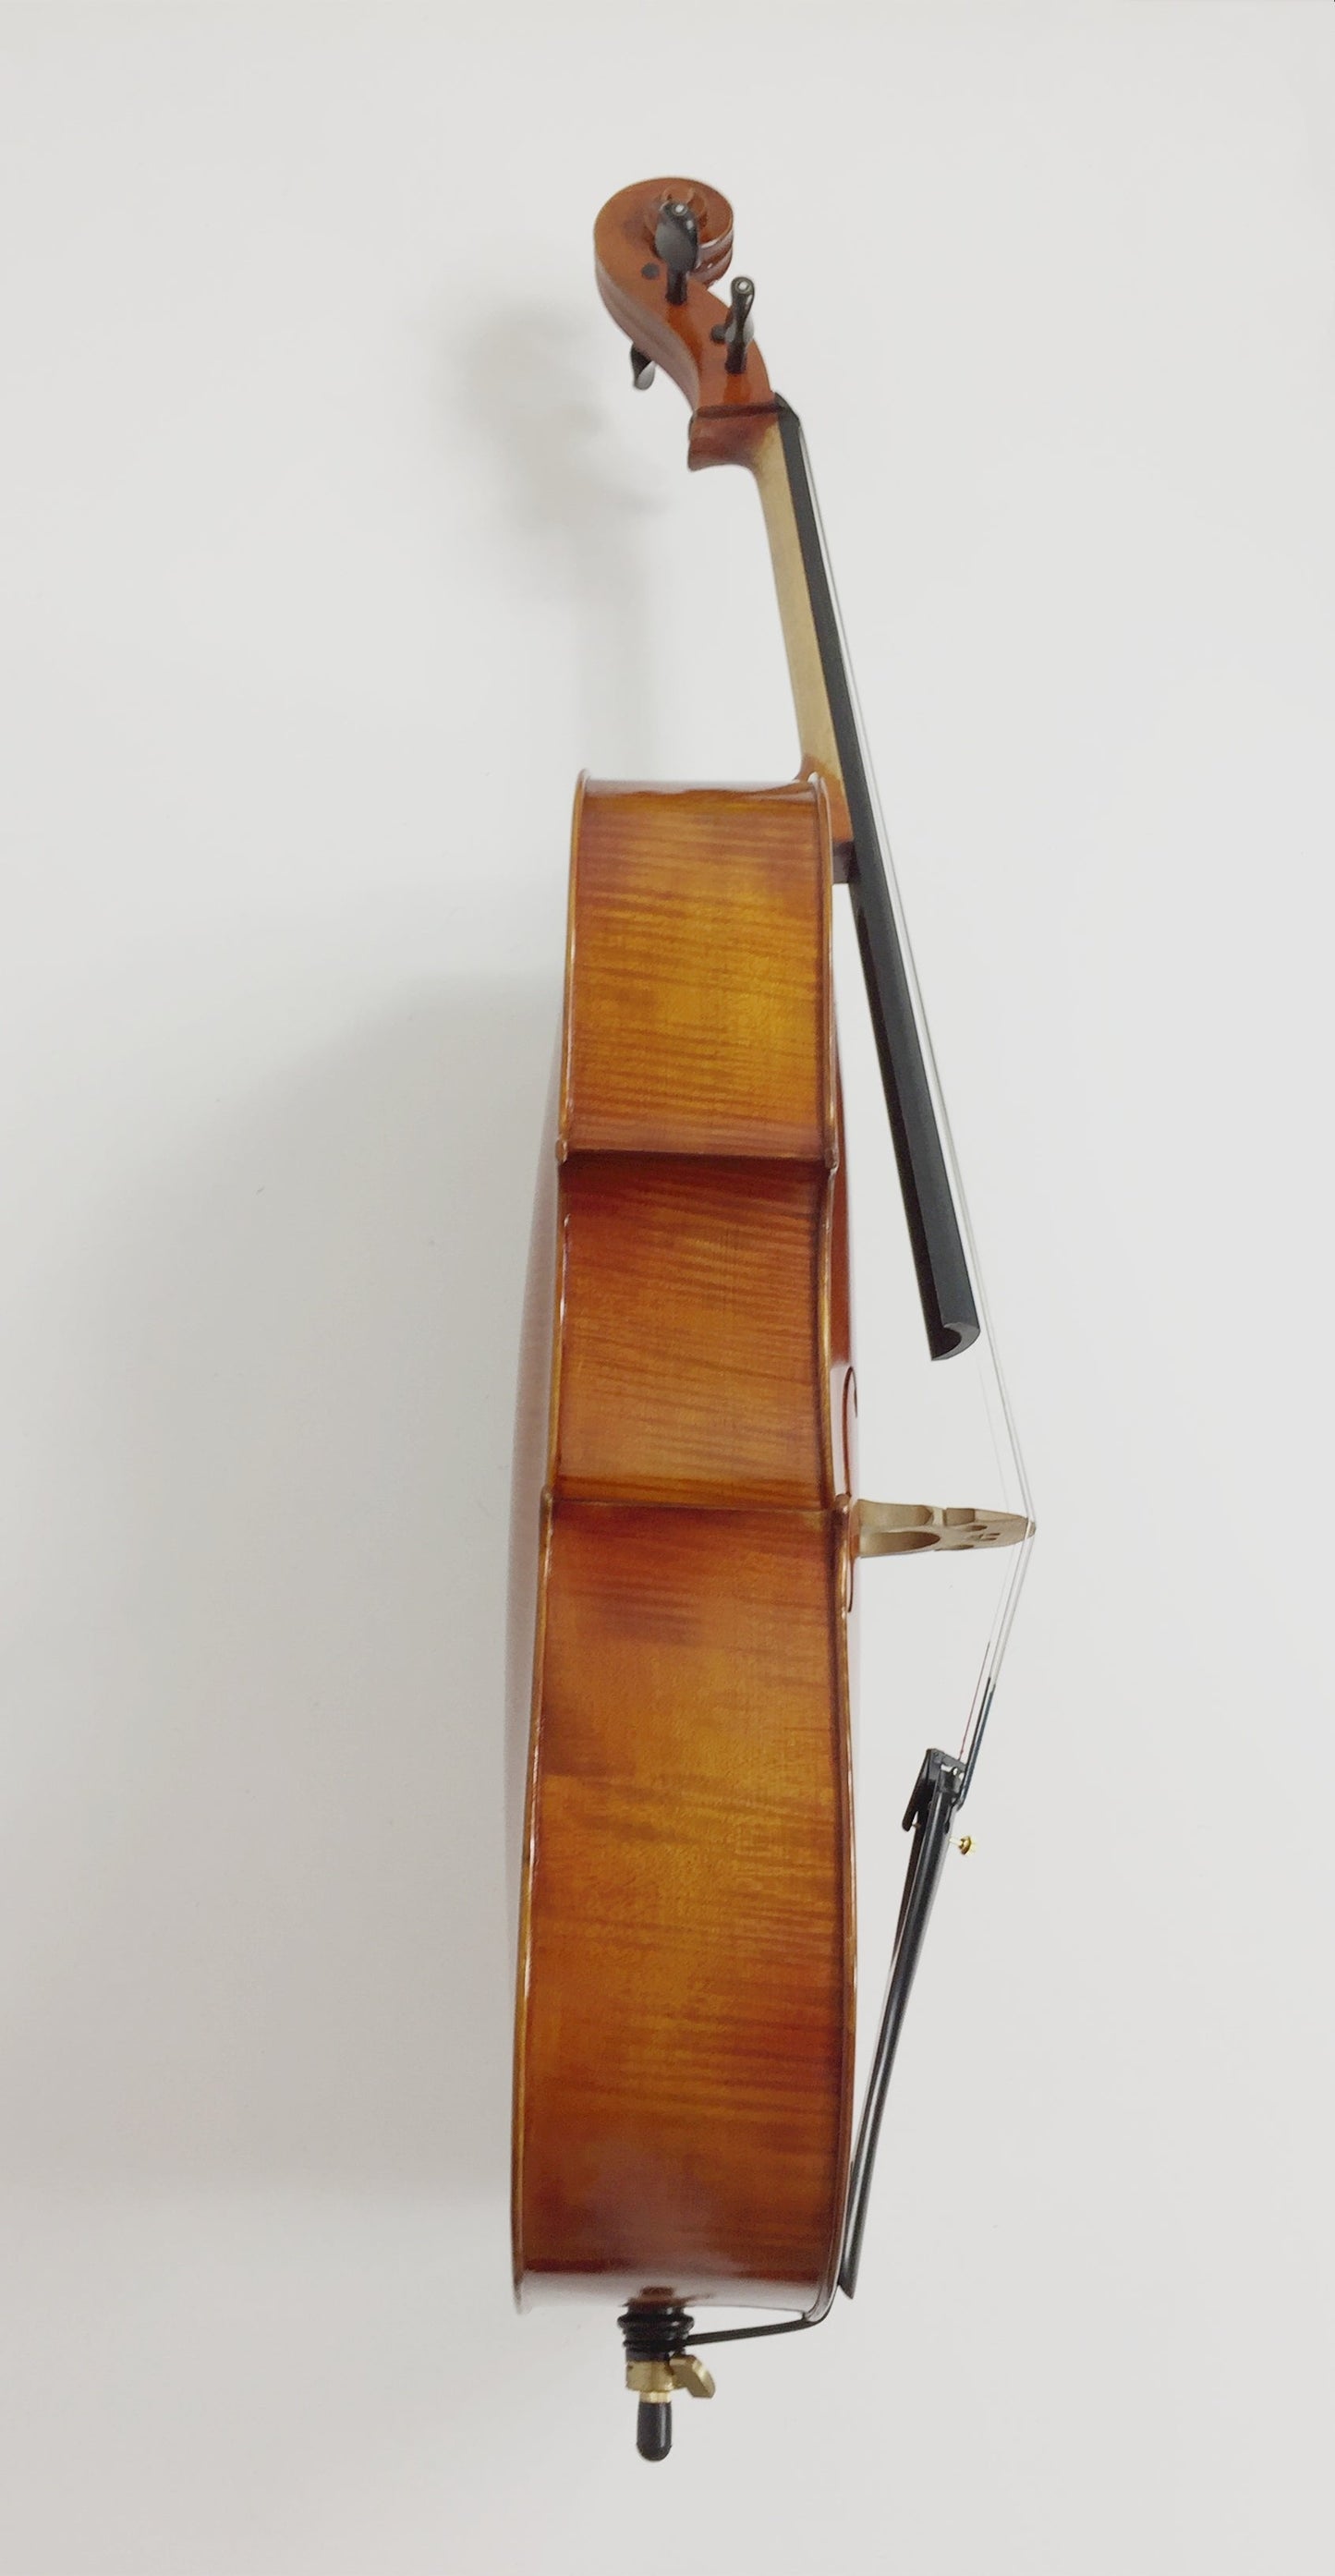 Symphony SJCE04A 4/4 Solid wood handmade cello outfit, ebony fittings